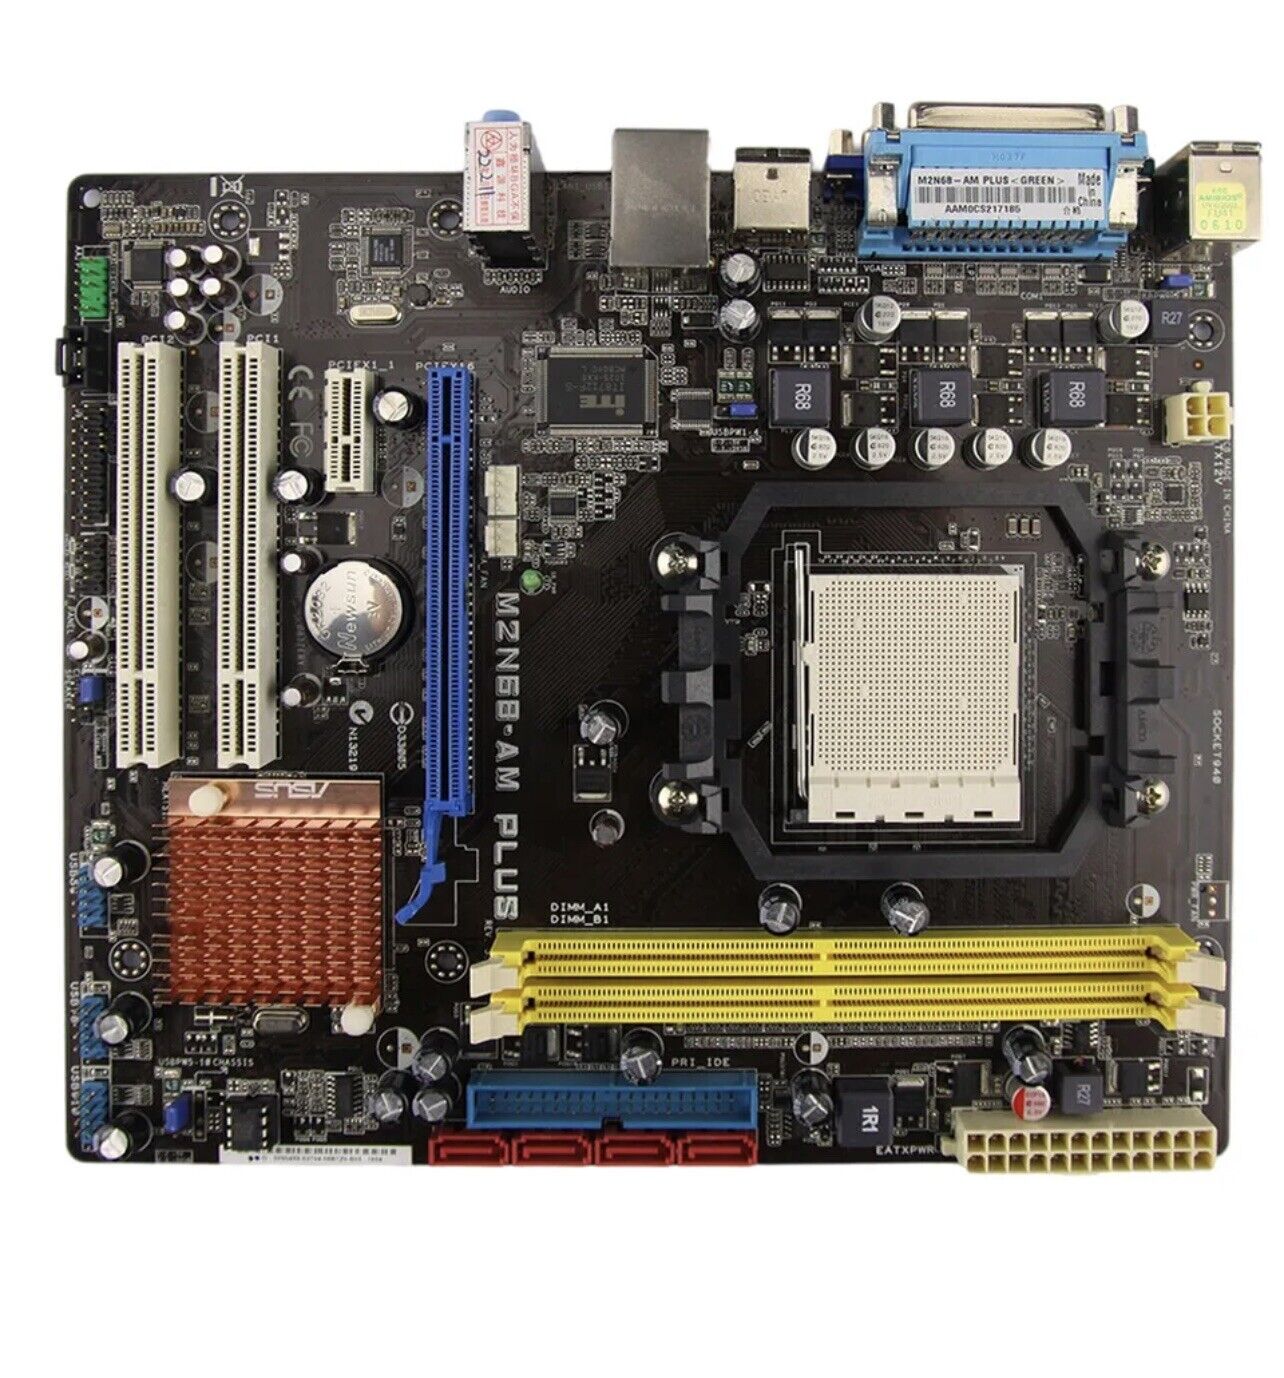 ASUS M2N68-AM PLUS NVIDIA GeForce 7025 AMD Socket AM2+ AM2 Micro ATX Motherboard